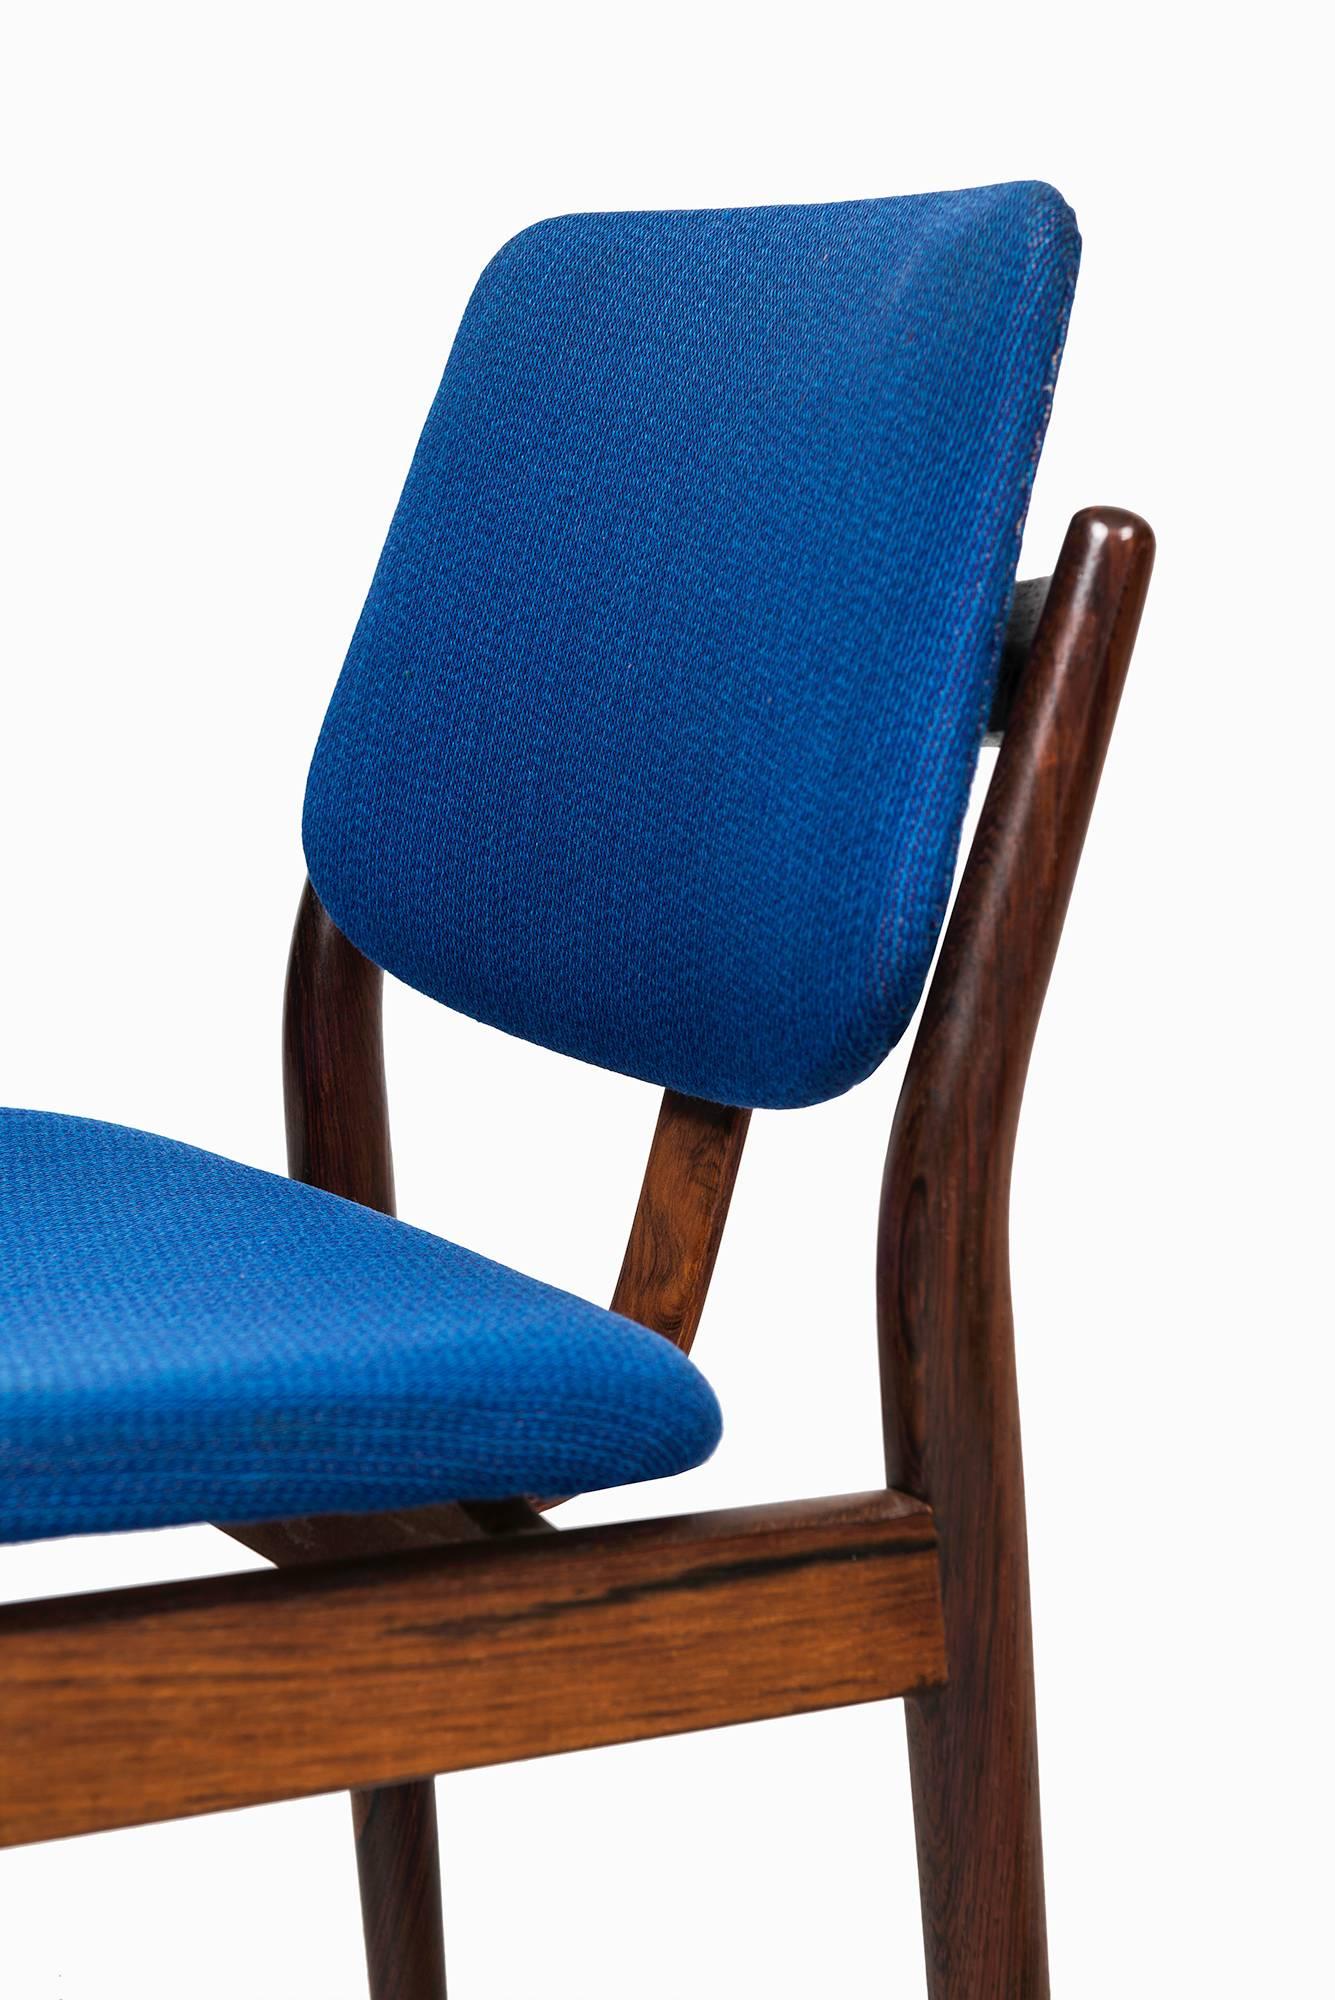 Mid-20th Century Arne Vodder Dining Chairs by Sibast Møbelfabrik in Denmark